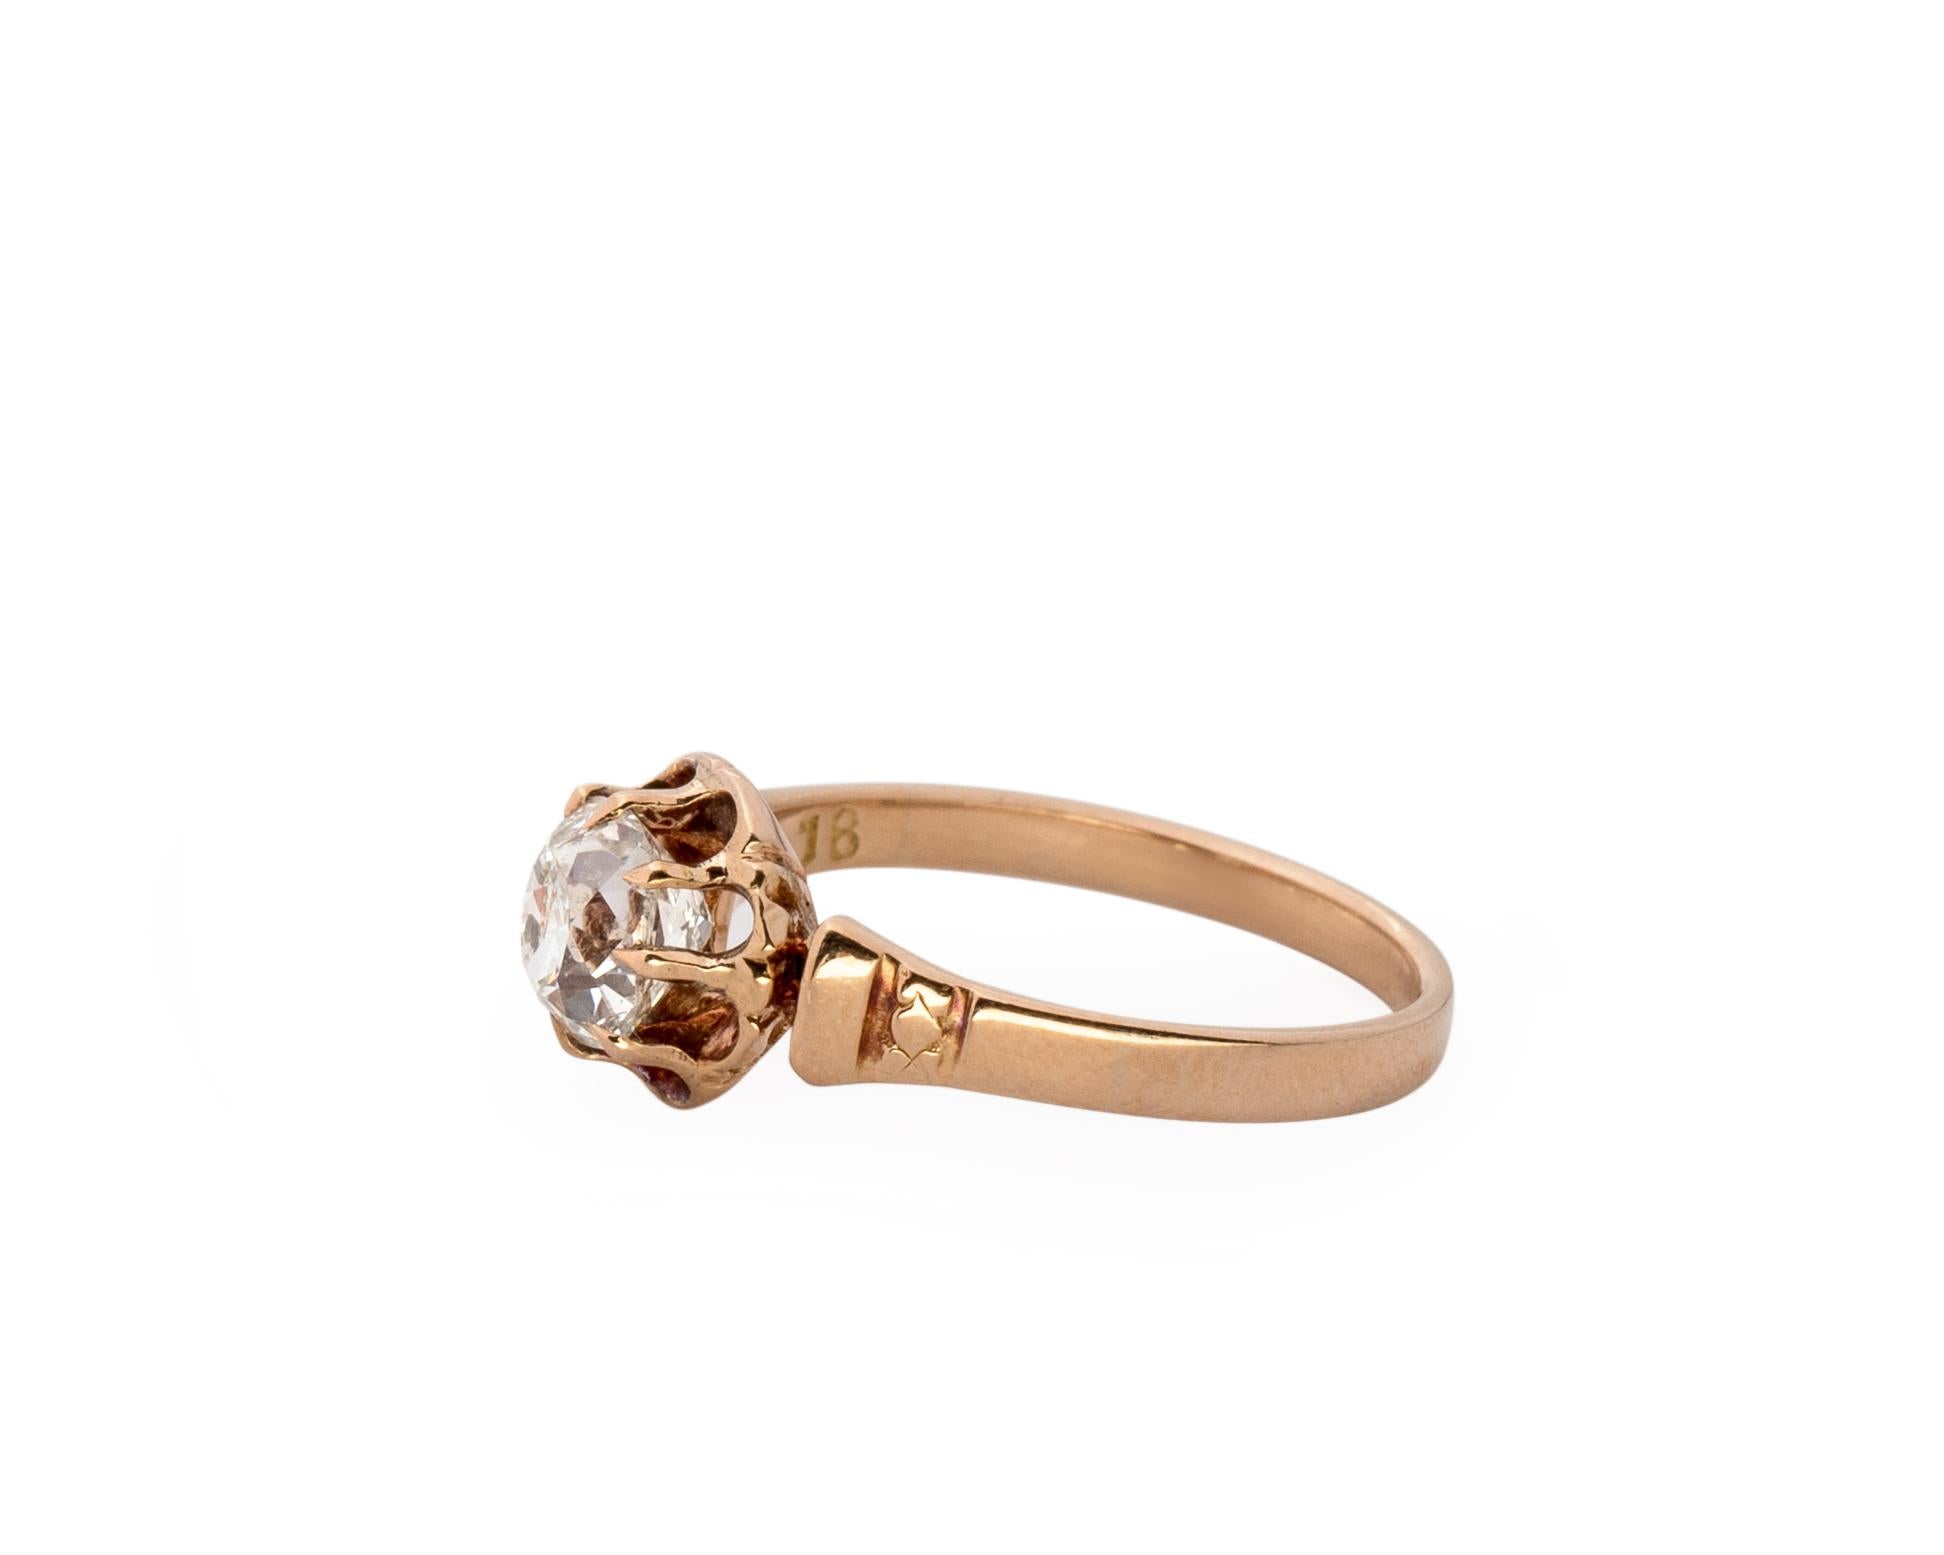 Women's 1890s 1 Carat Old Mine Diamond Engagement Ring, 18 Karat Gold